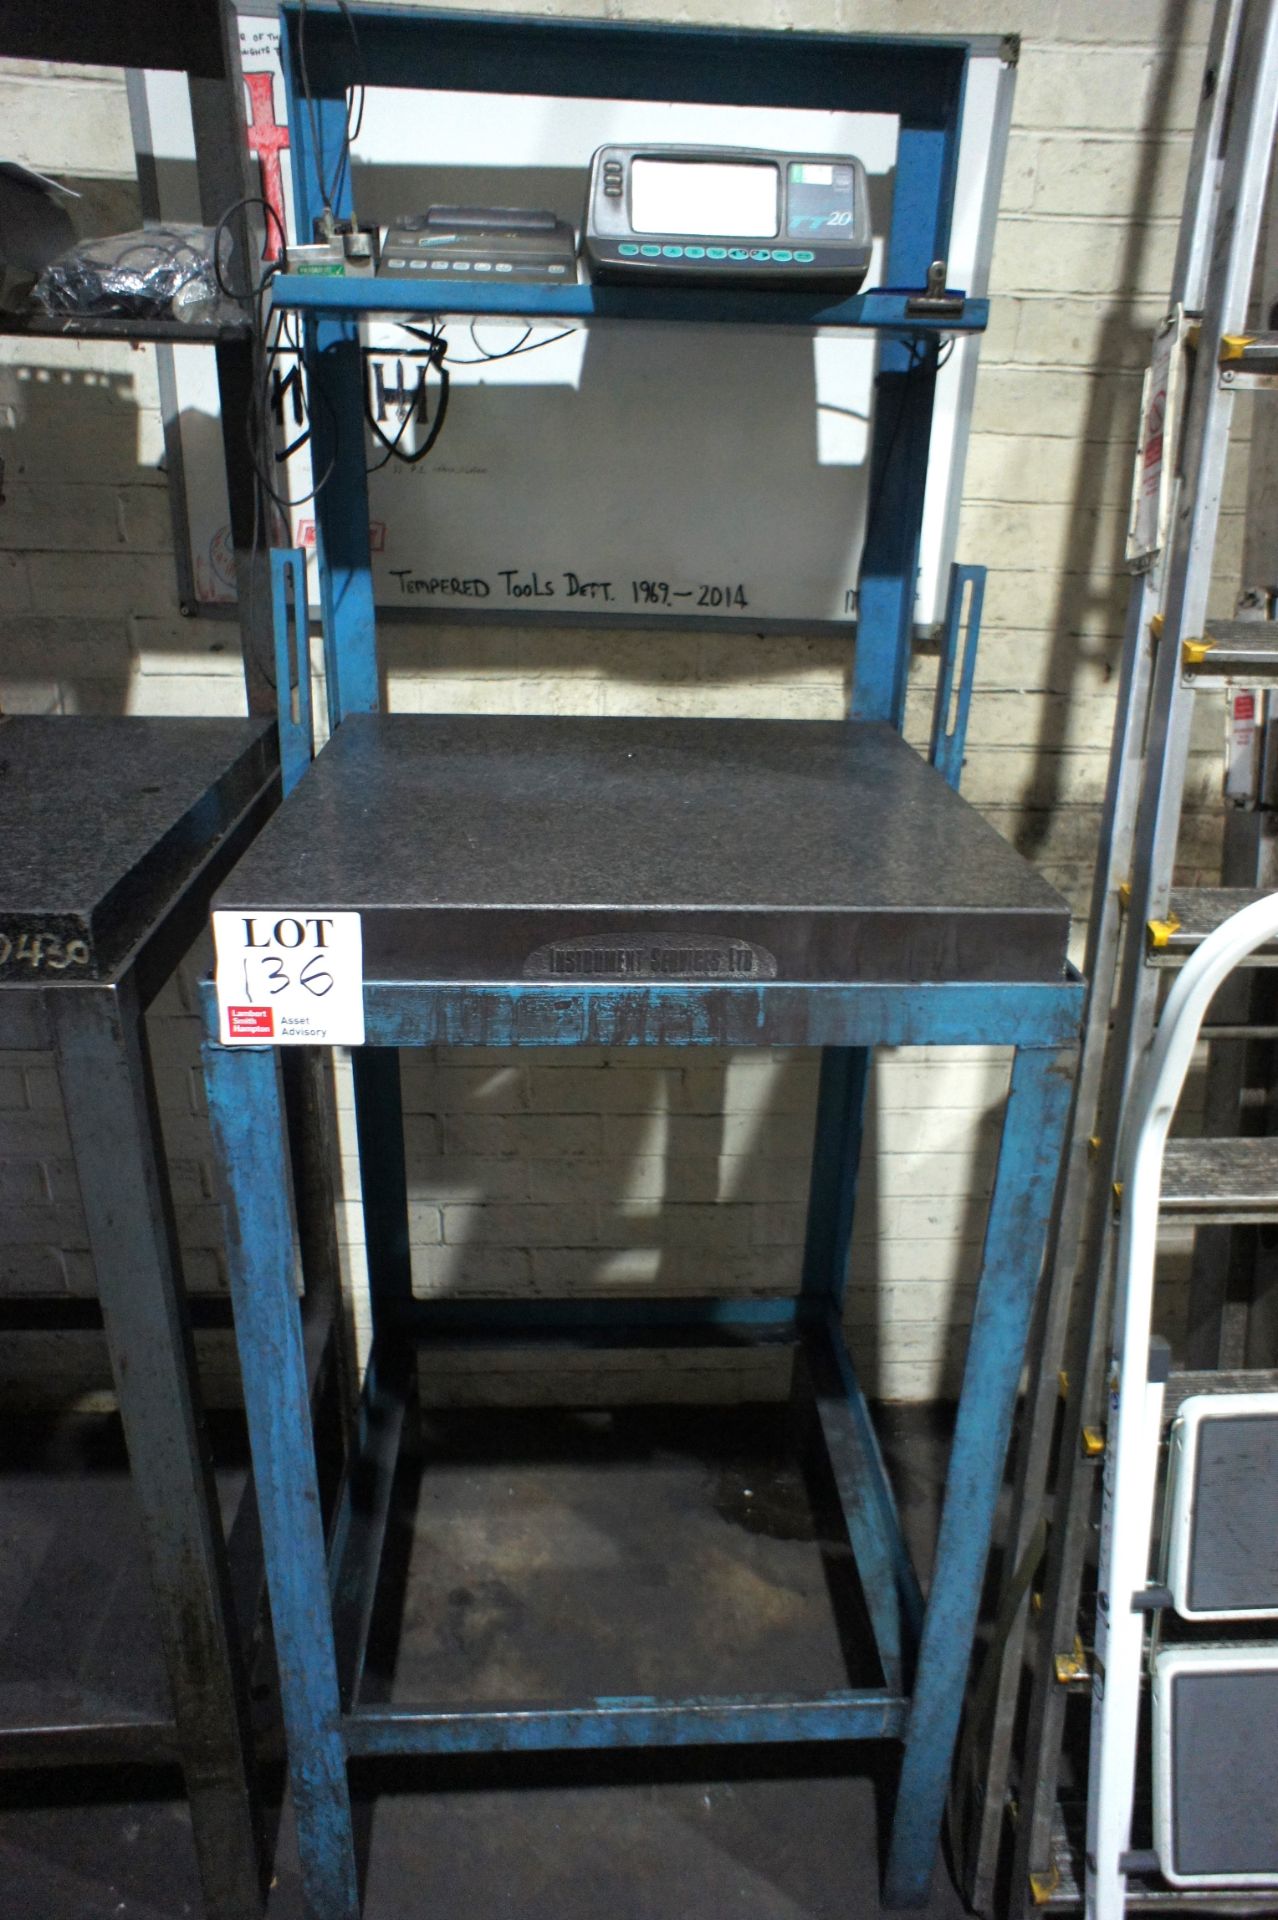 Inspection rig, granite insert 2' x 2' with Tesa TT20 probe display unit